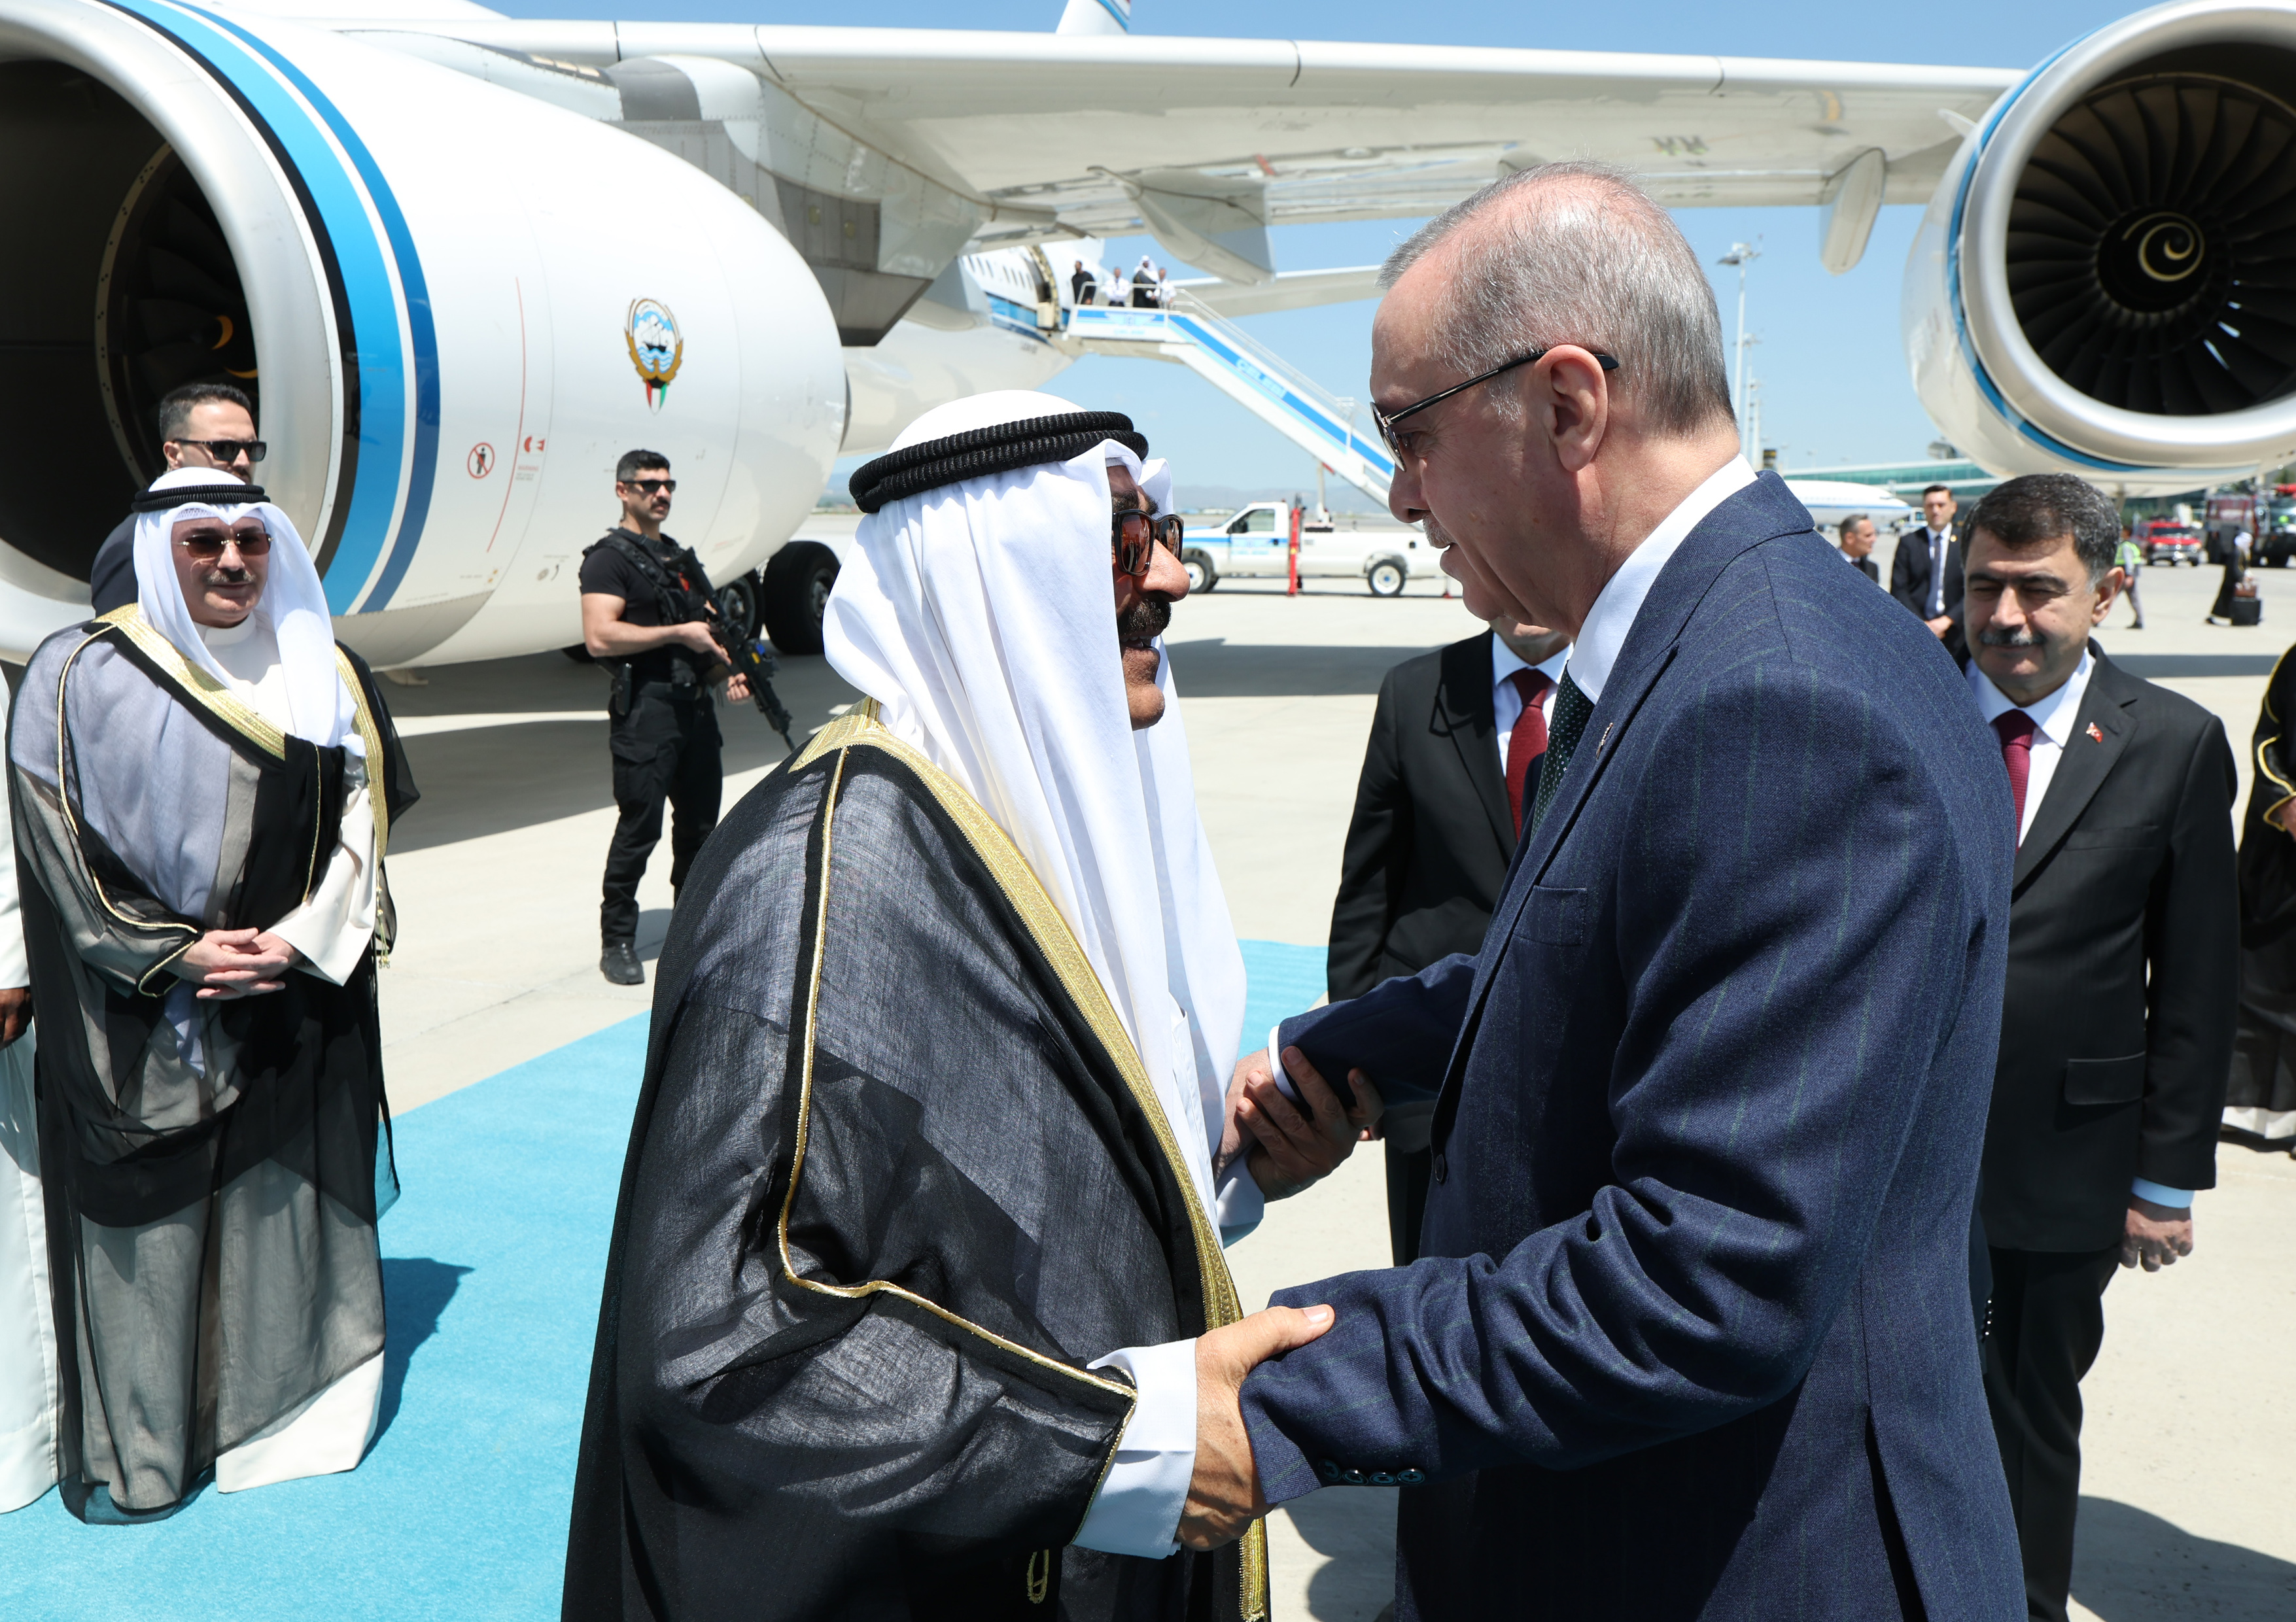 Türkiye-Kuwait relations constitute role model for bilateral relations